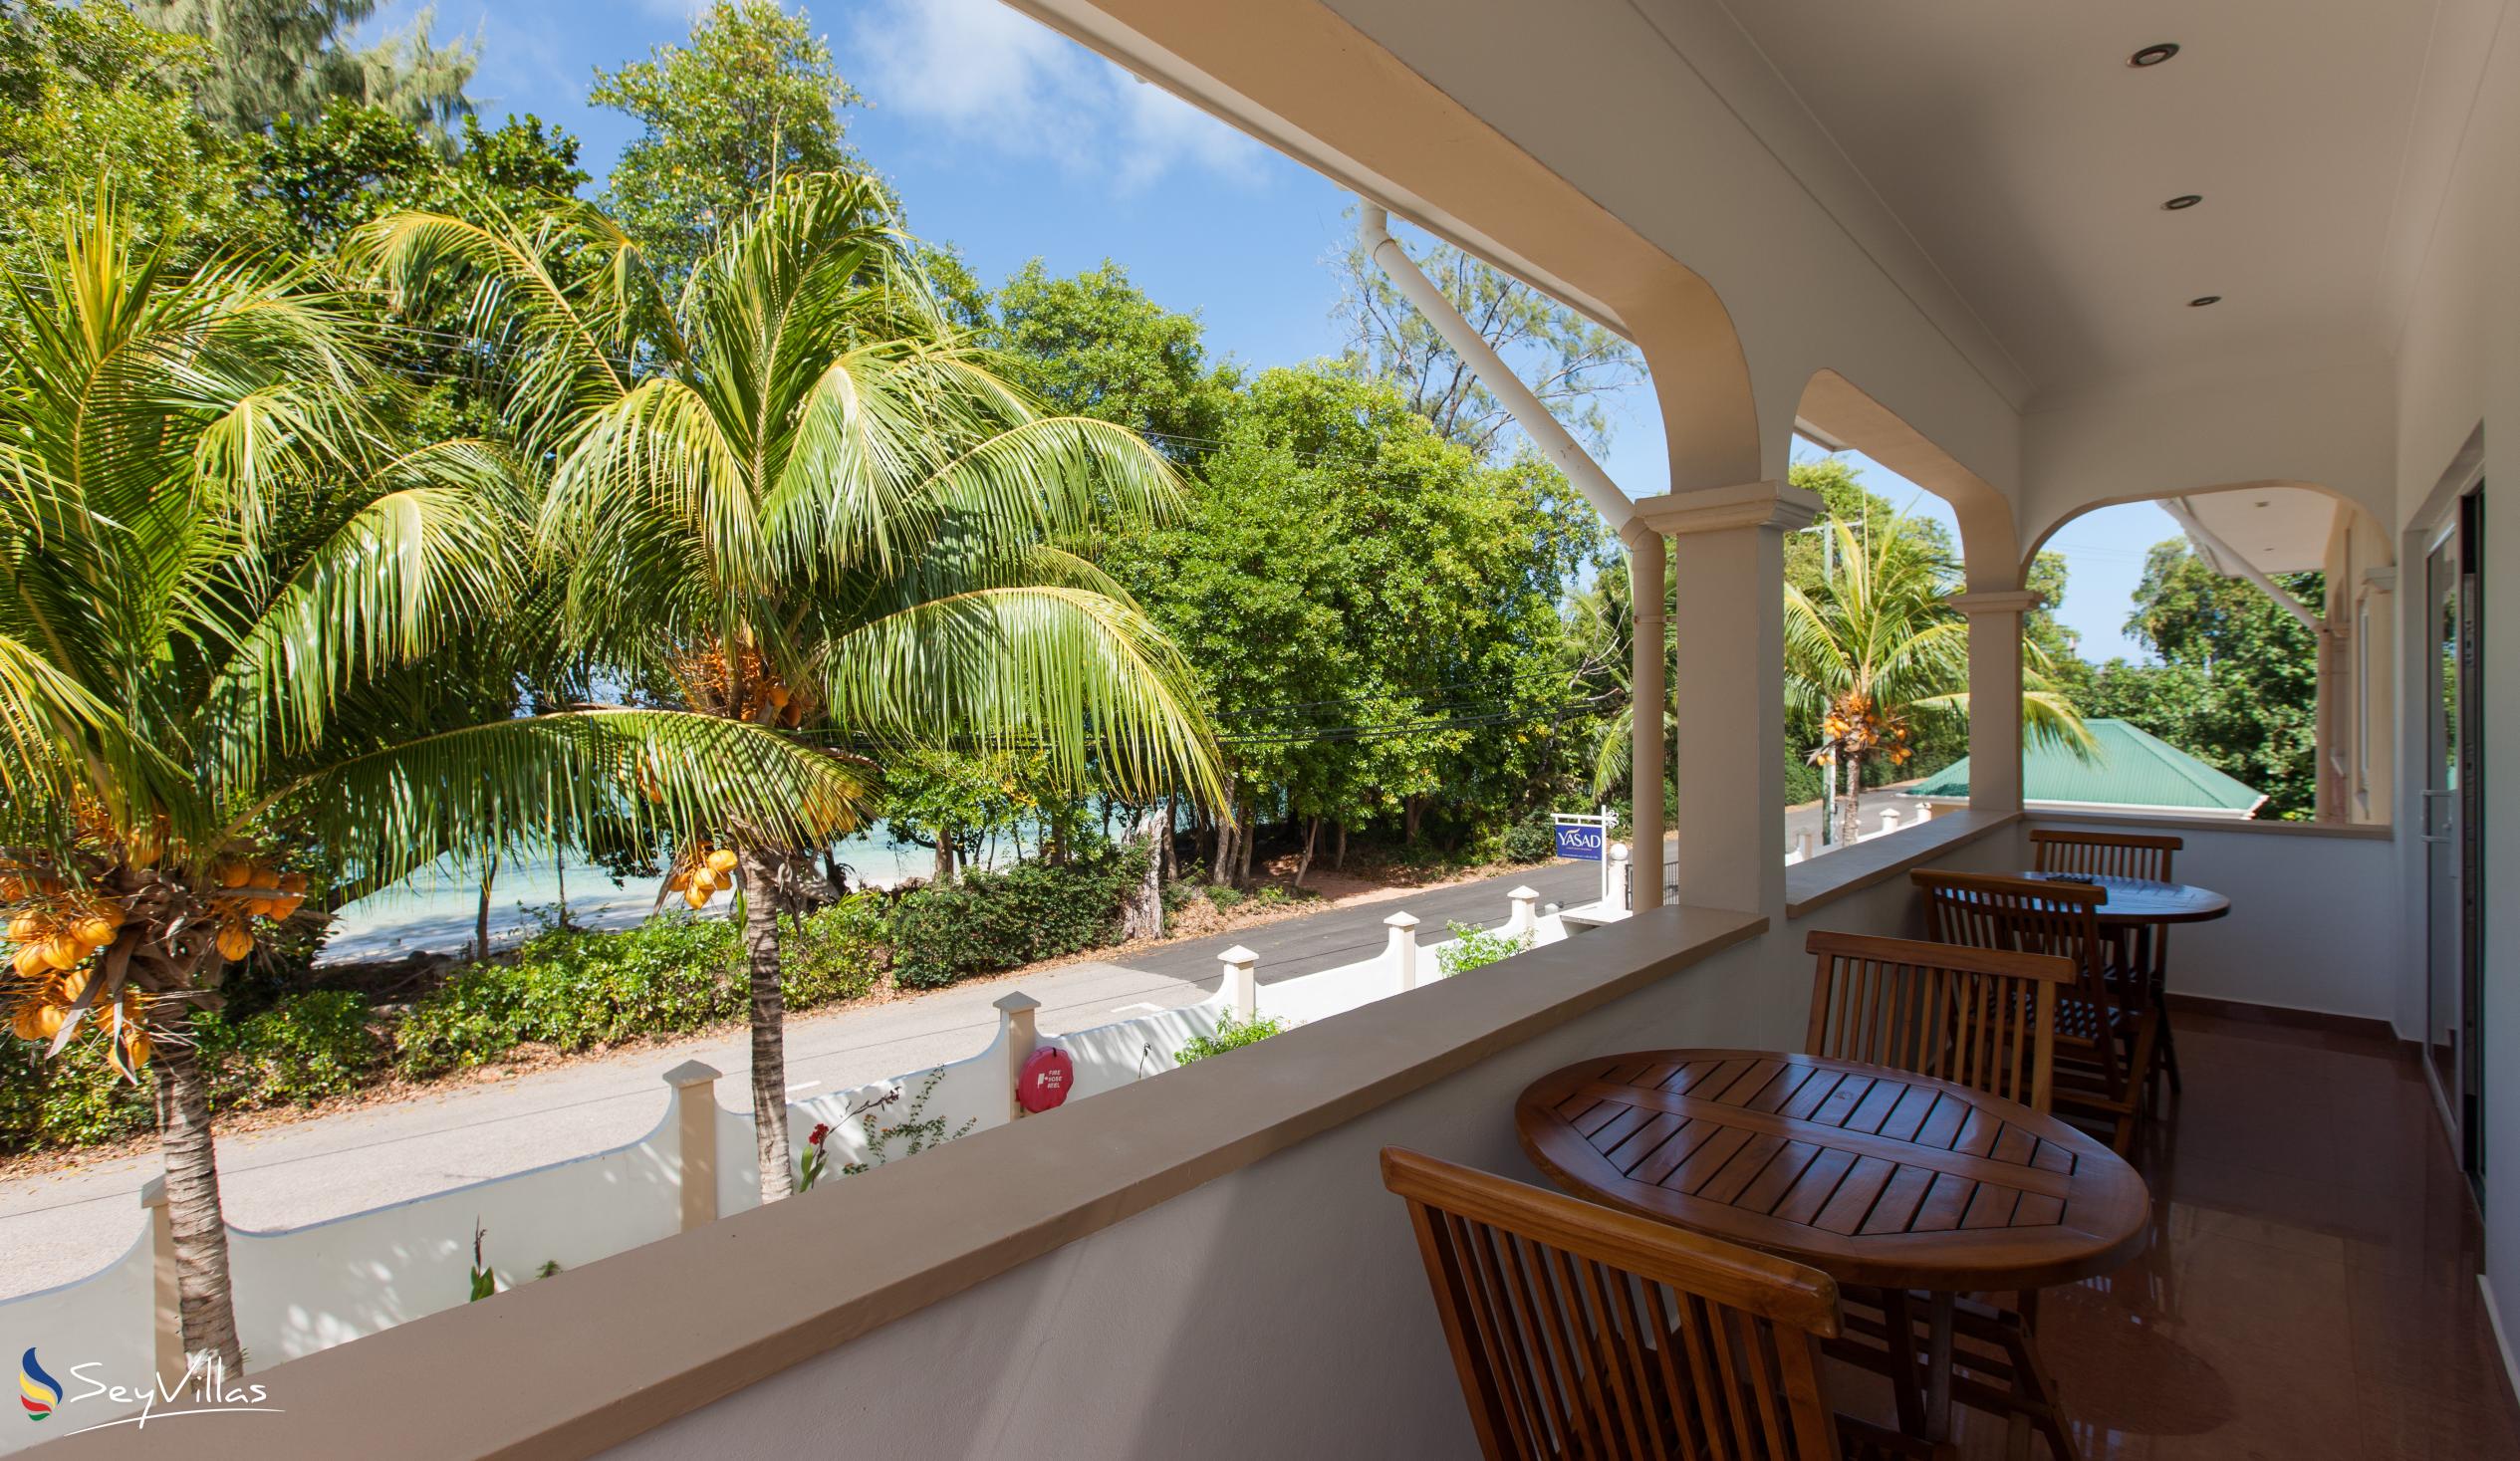 Foto 8: YASAD Luxury Beach Residence - Appartement 3 chambres - Praslin (Seychelles)